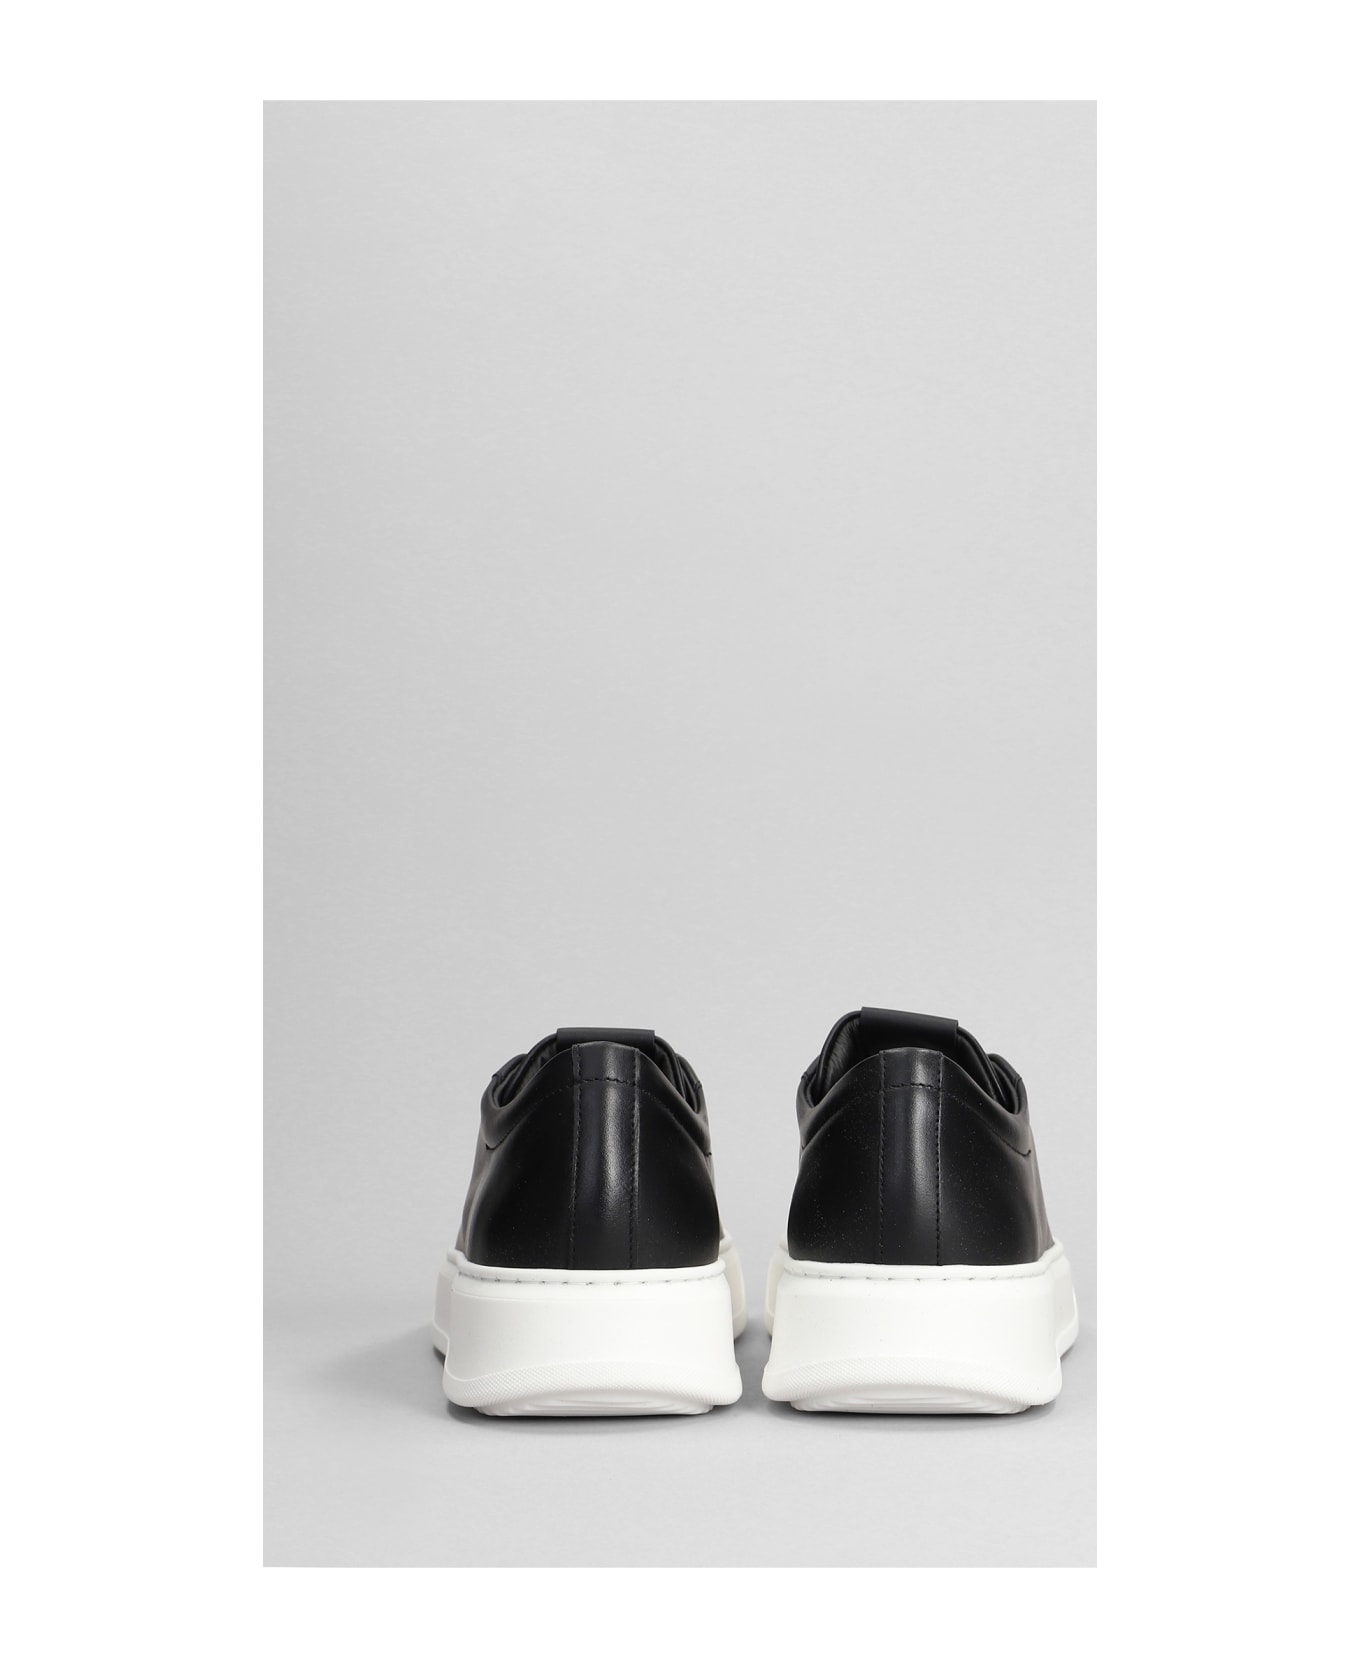 Copenhagen Sneakers In Black Leather - black